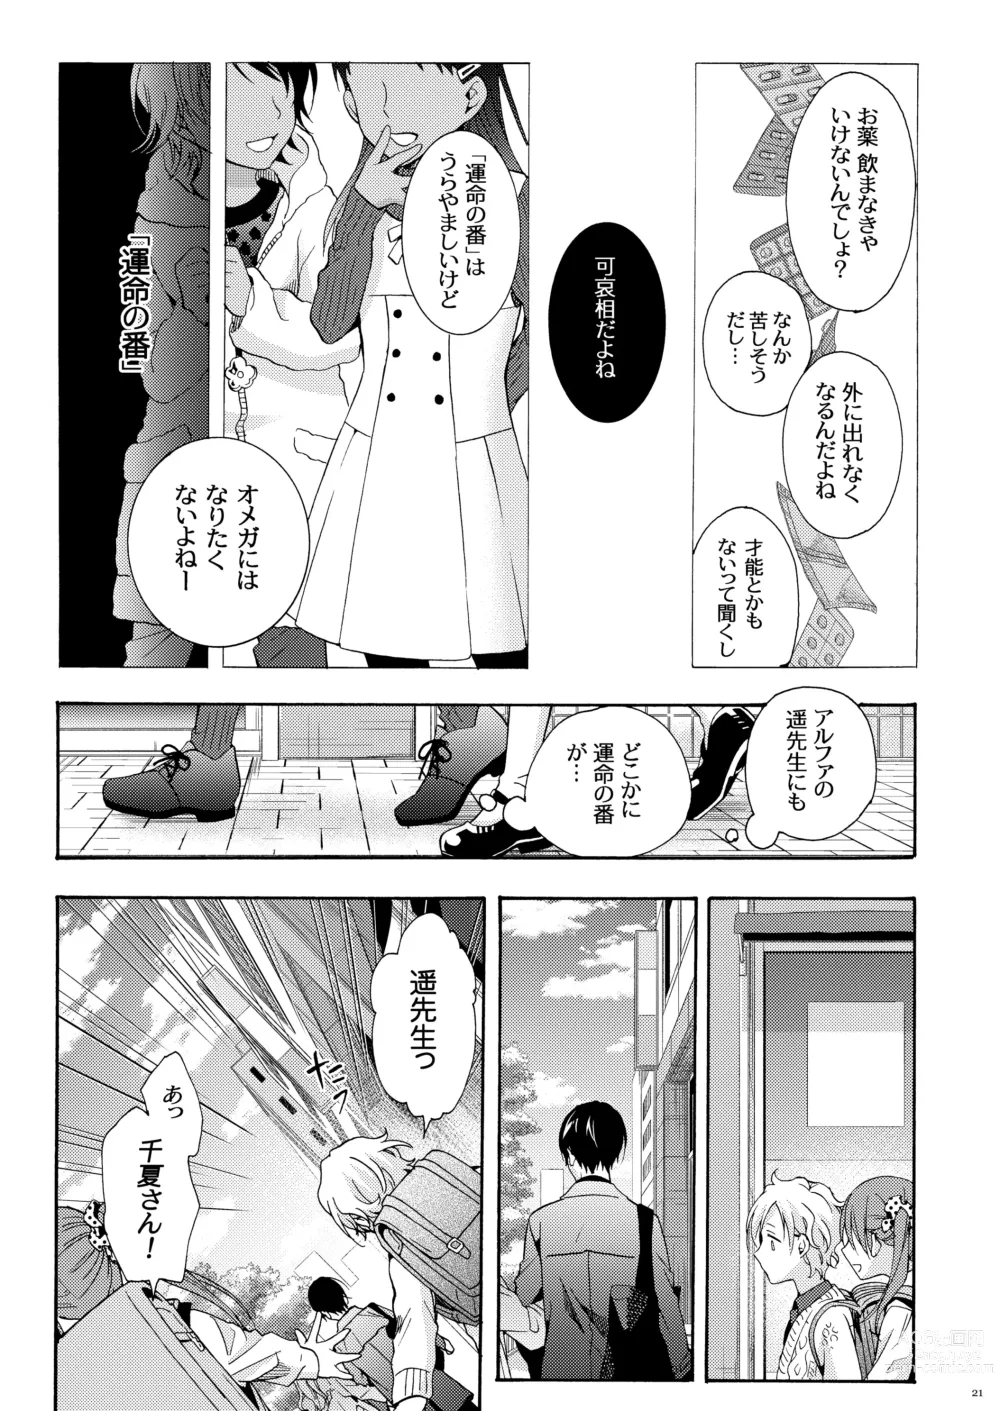 Page 20 of manga Boku no Tame no Omega